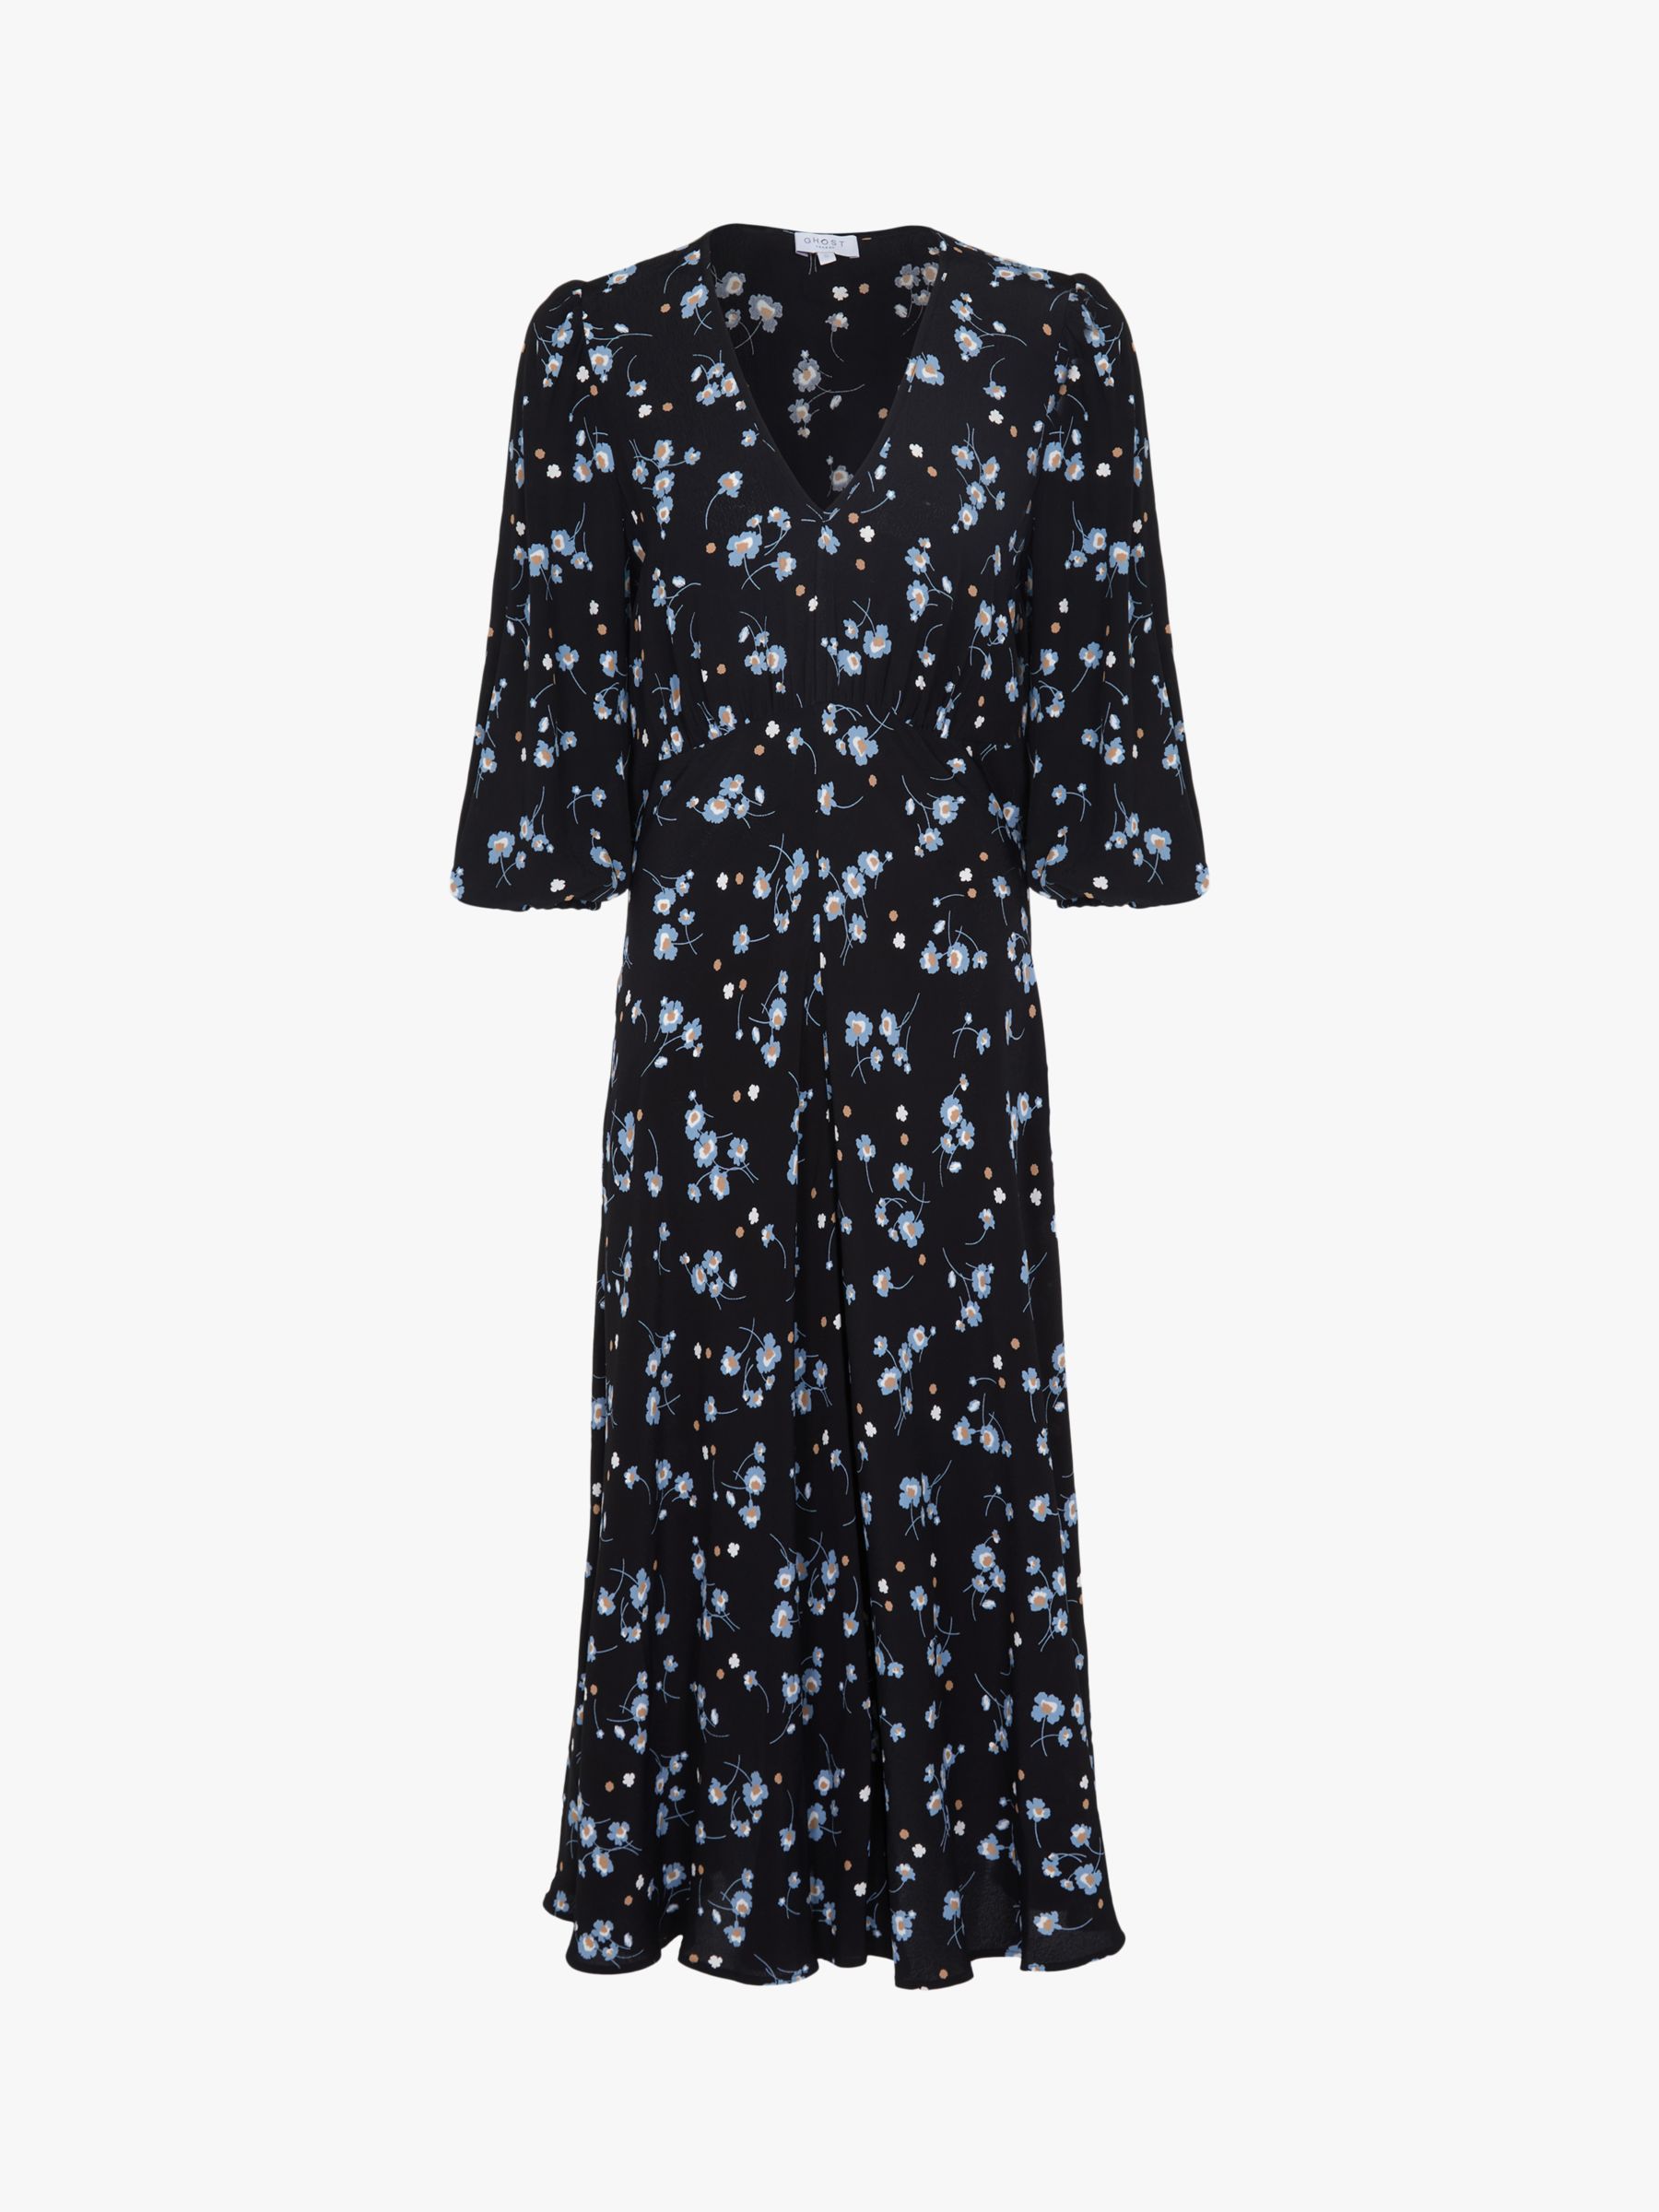 Ghost Evie Floral Midi Dress, Black/Multi